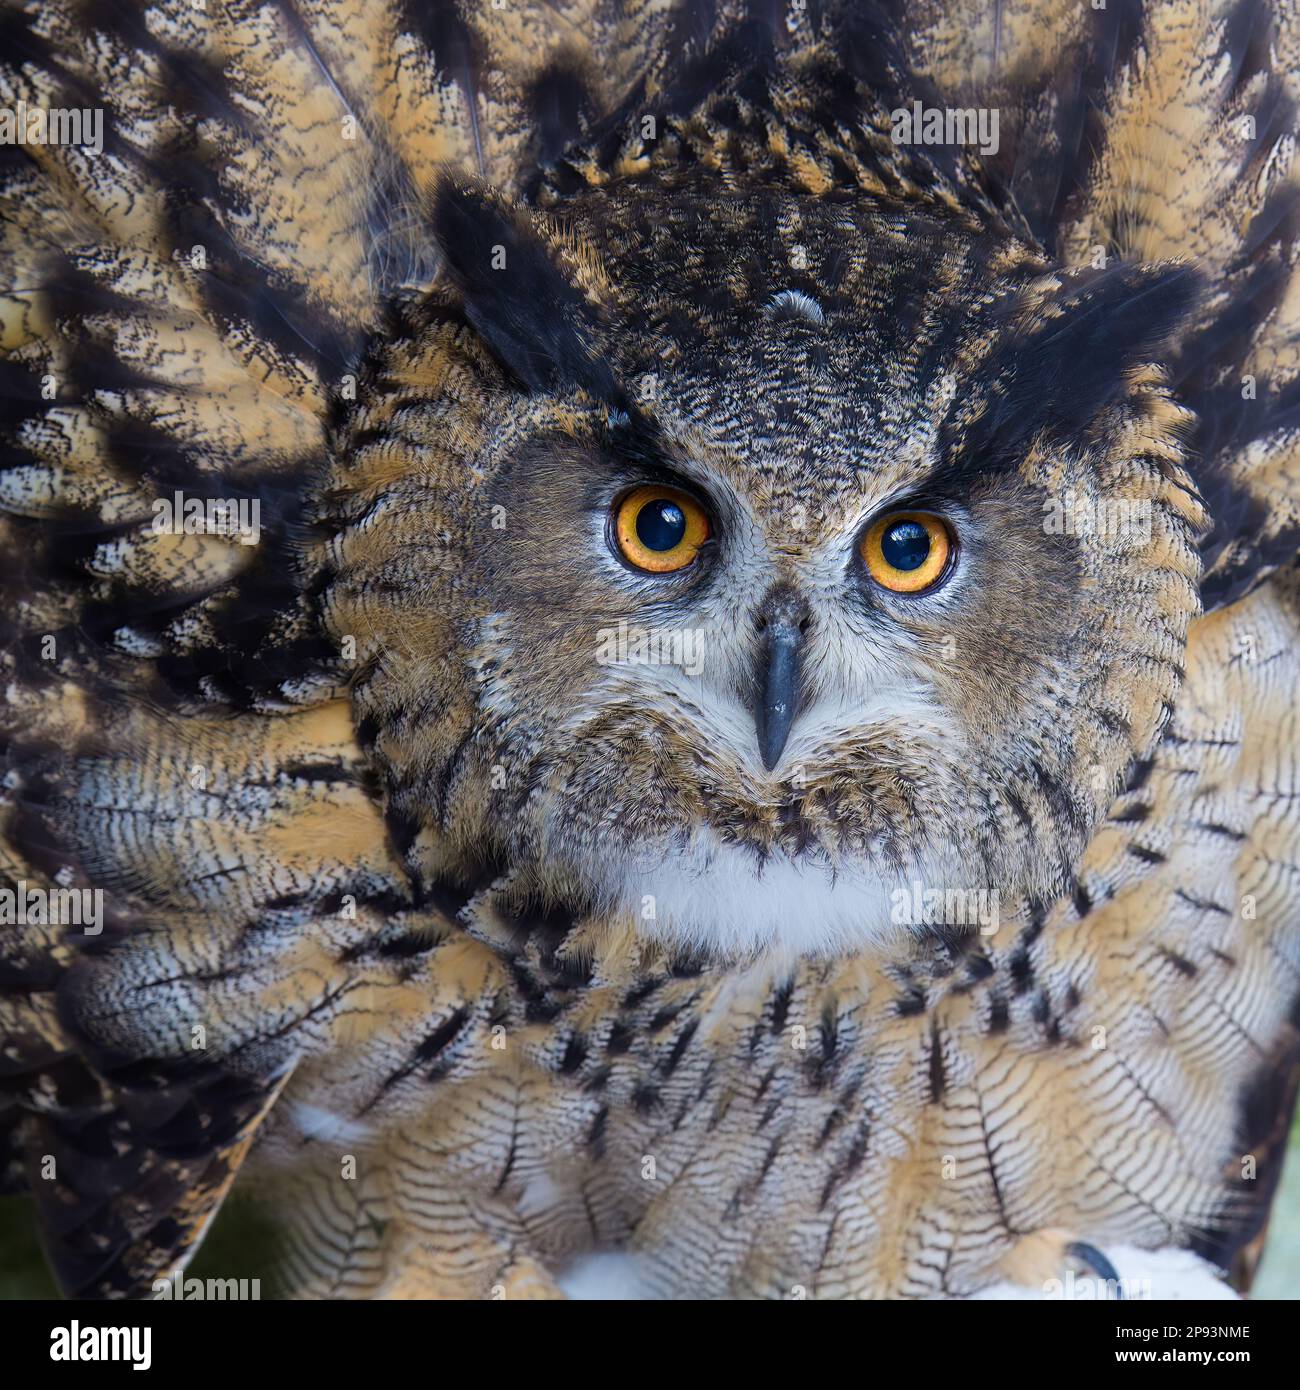 Eagle owl agrandar buscando al oponente Foto de stock